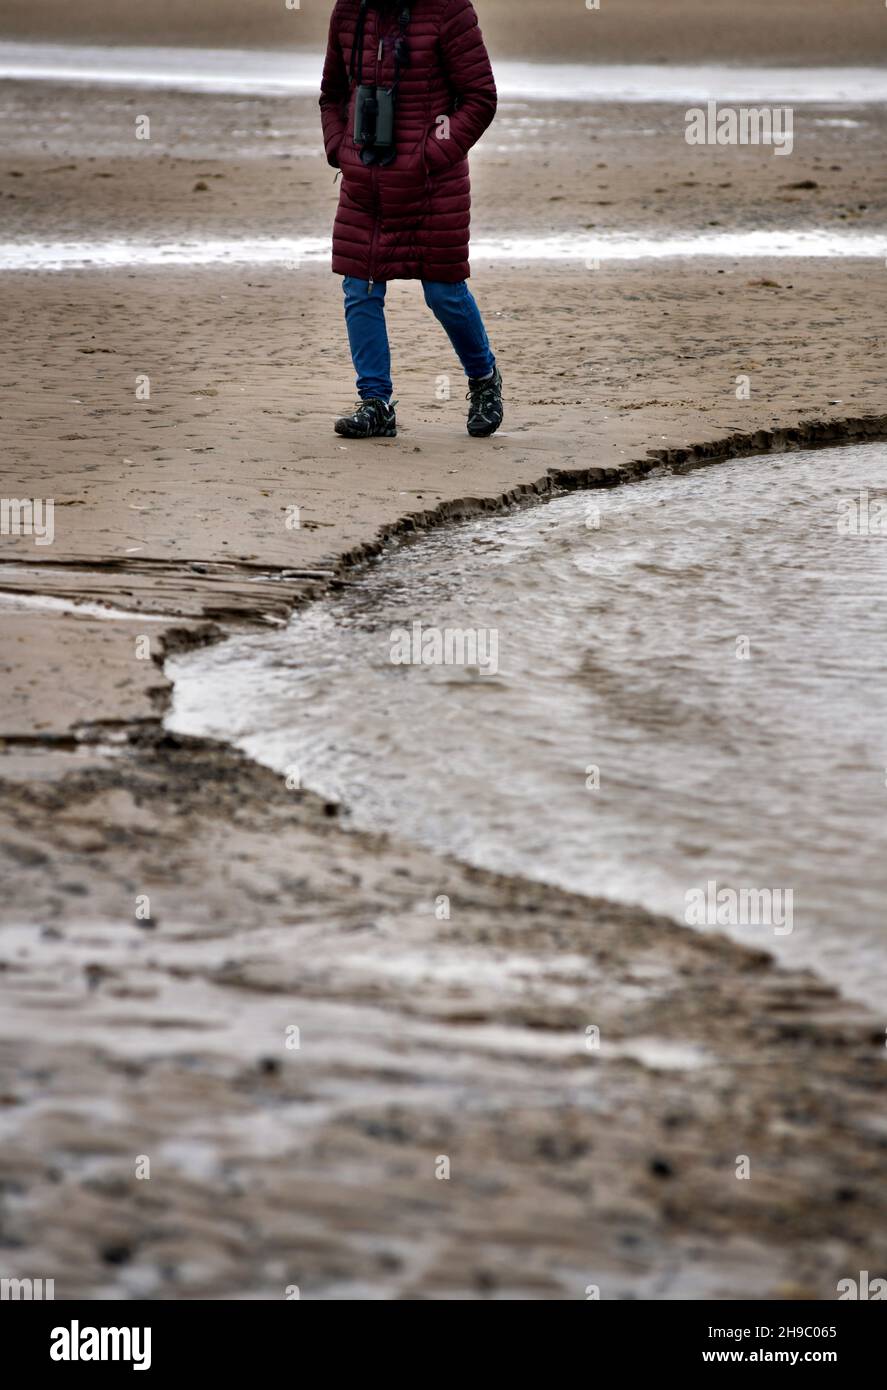 Solidarischer Mensch, der am Strand entlang läuft holme-net-the-Sea norfolk england Stockfoto